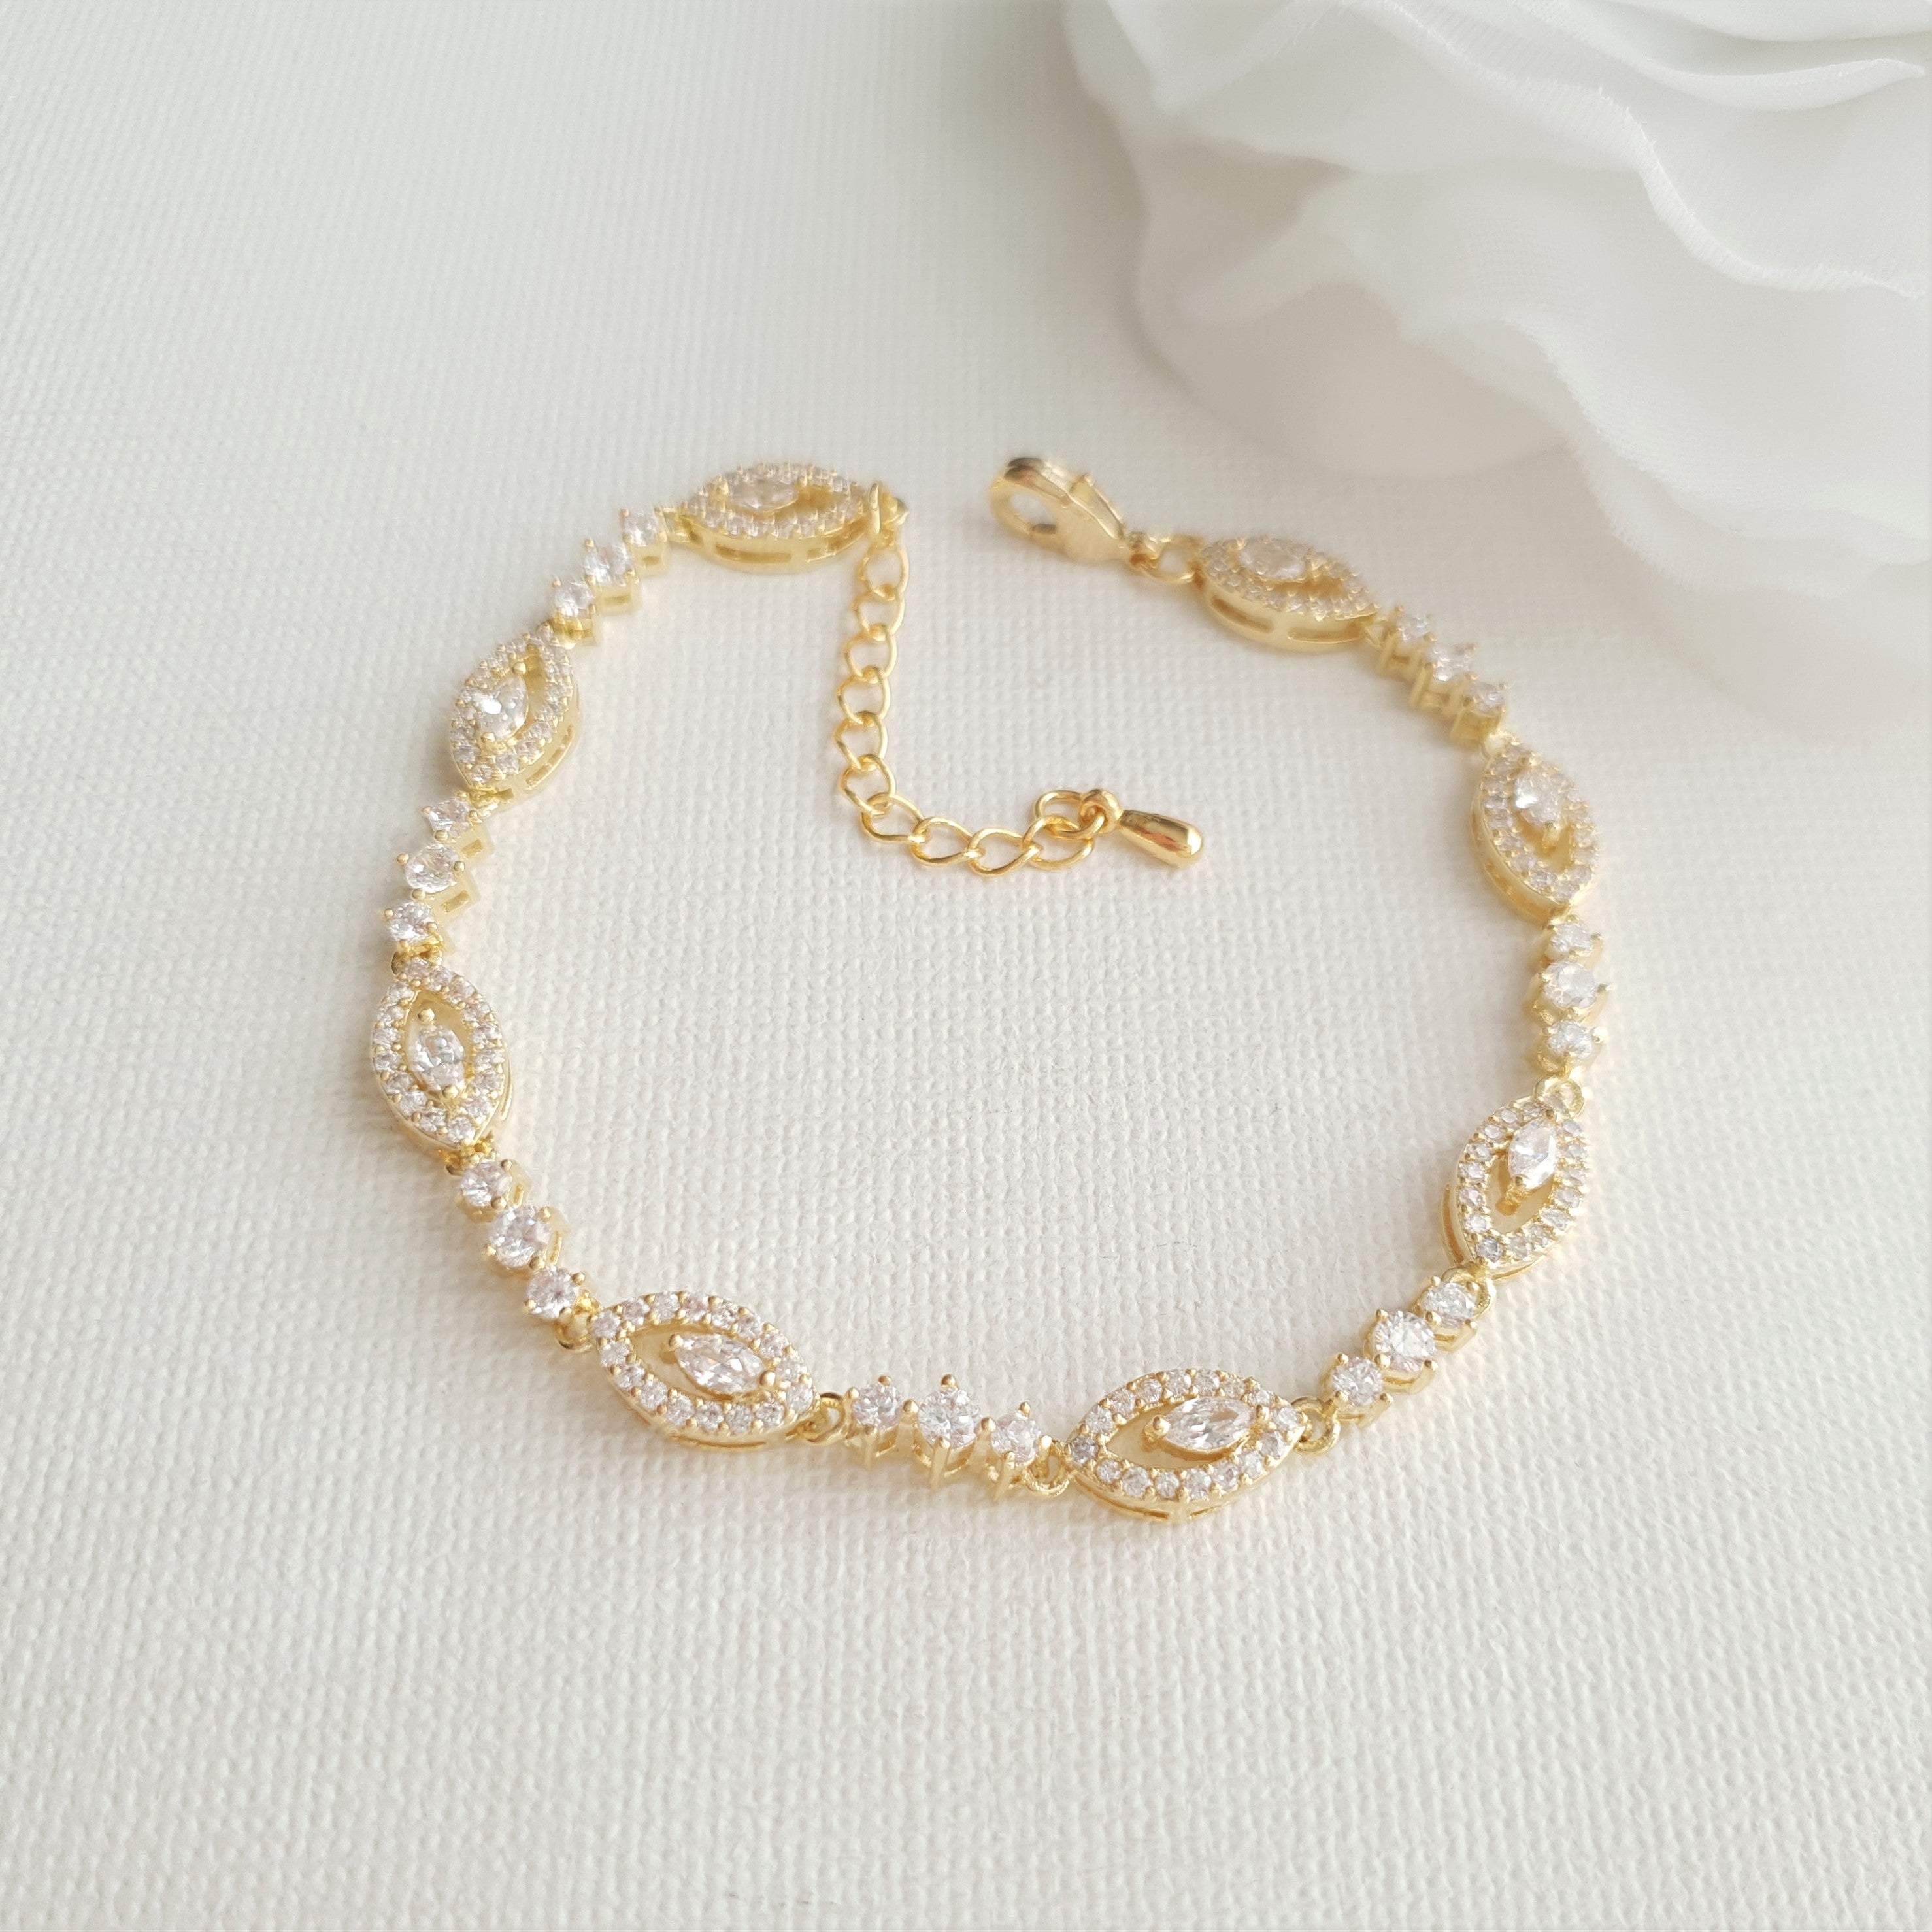 Stylish Handmade Forming Gold Bracelet Designs For Mens BRAC748